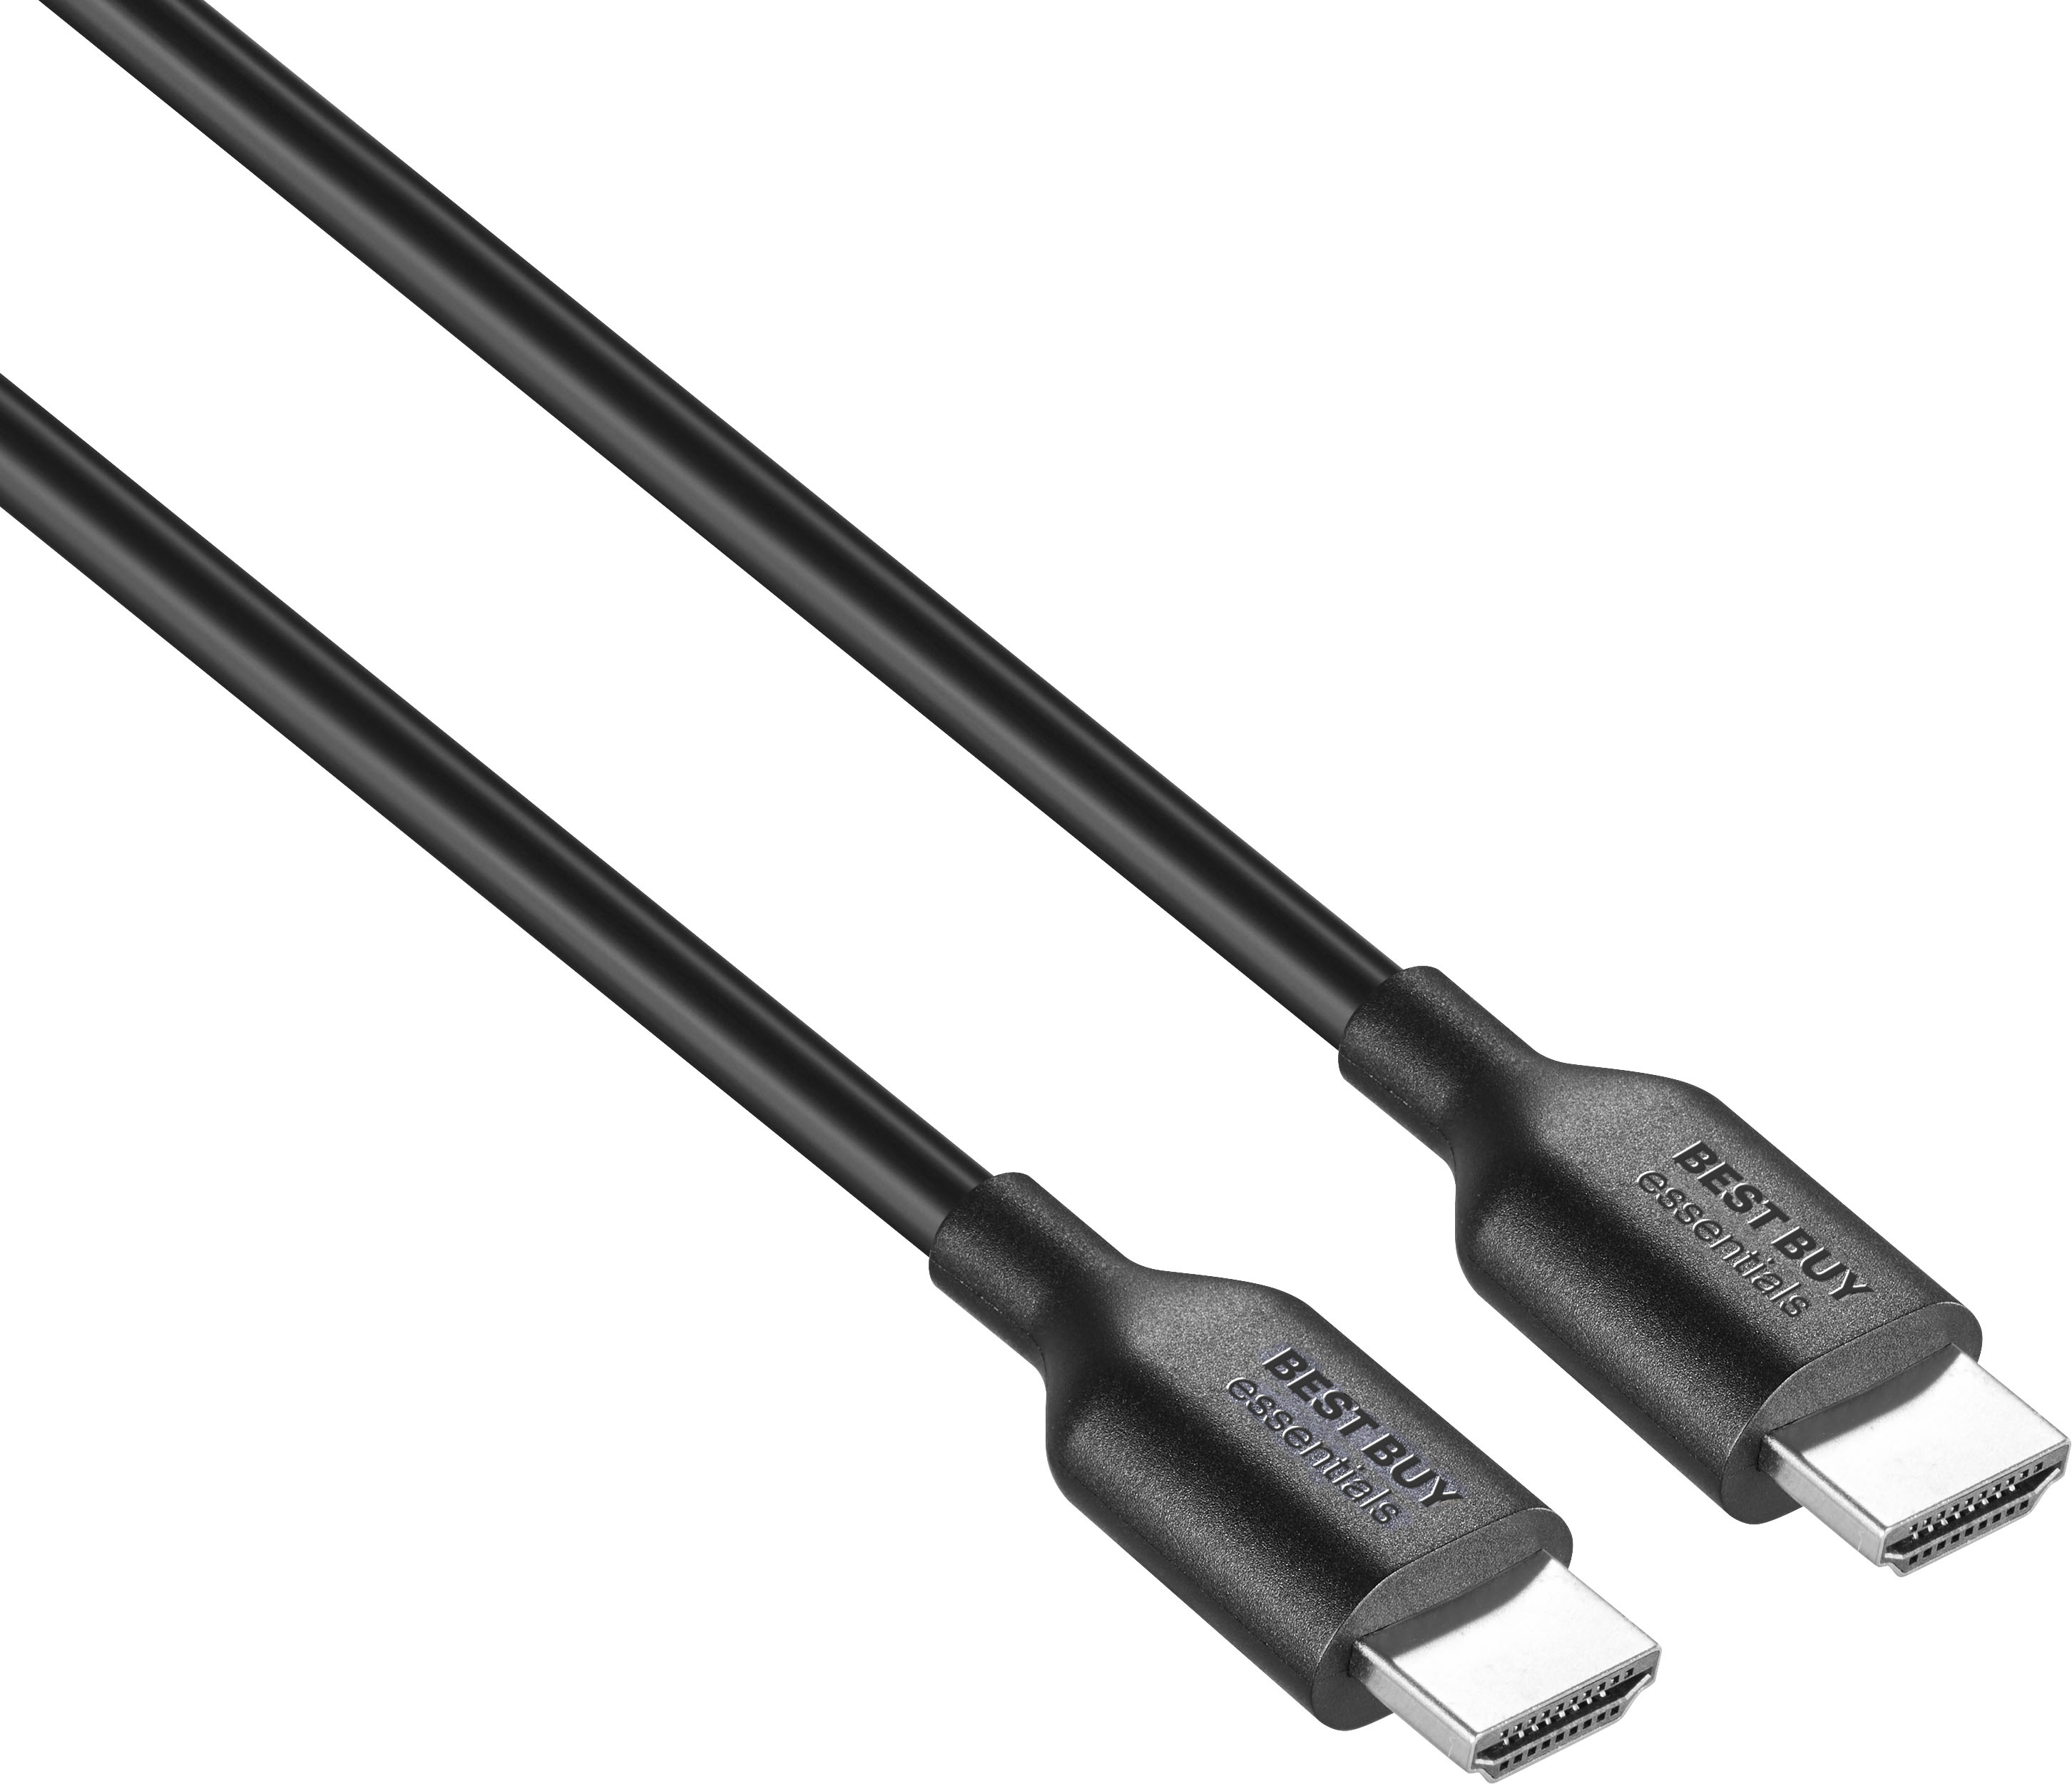 StarTech.com 6' HDMI to DVI-D Video Cable Black HDMIDVIMM6 - Best Buy